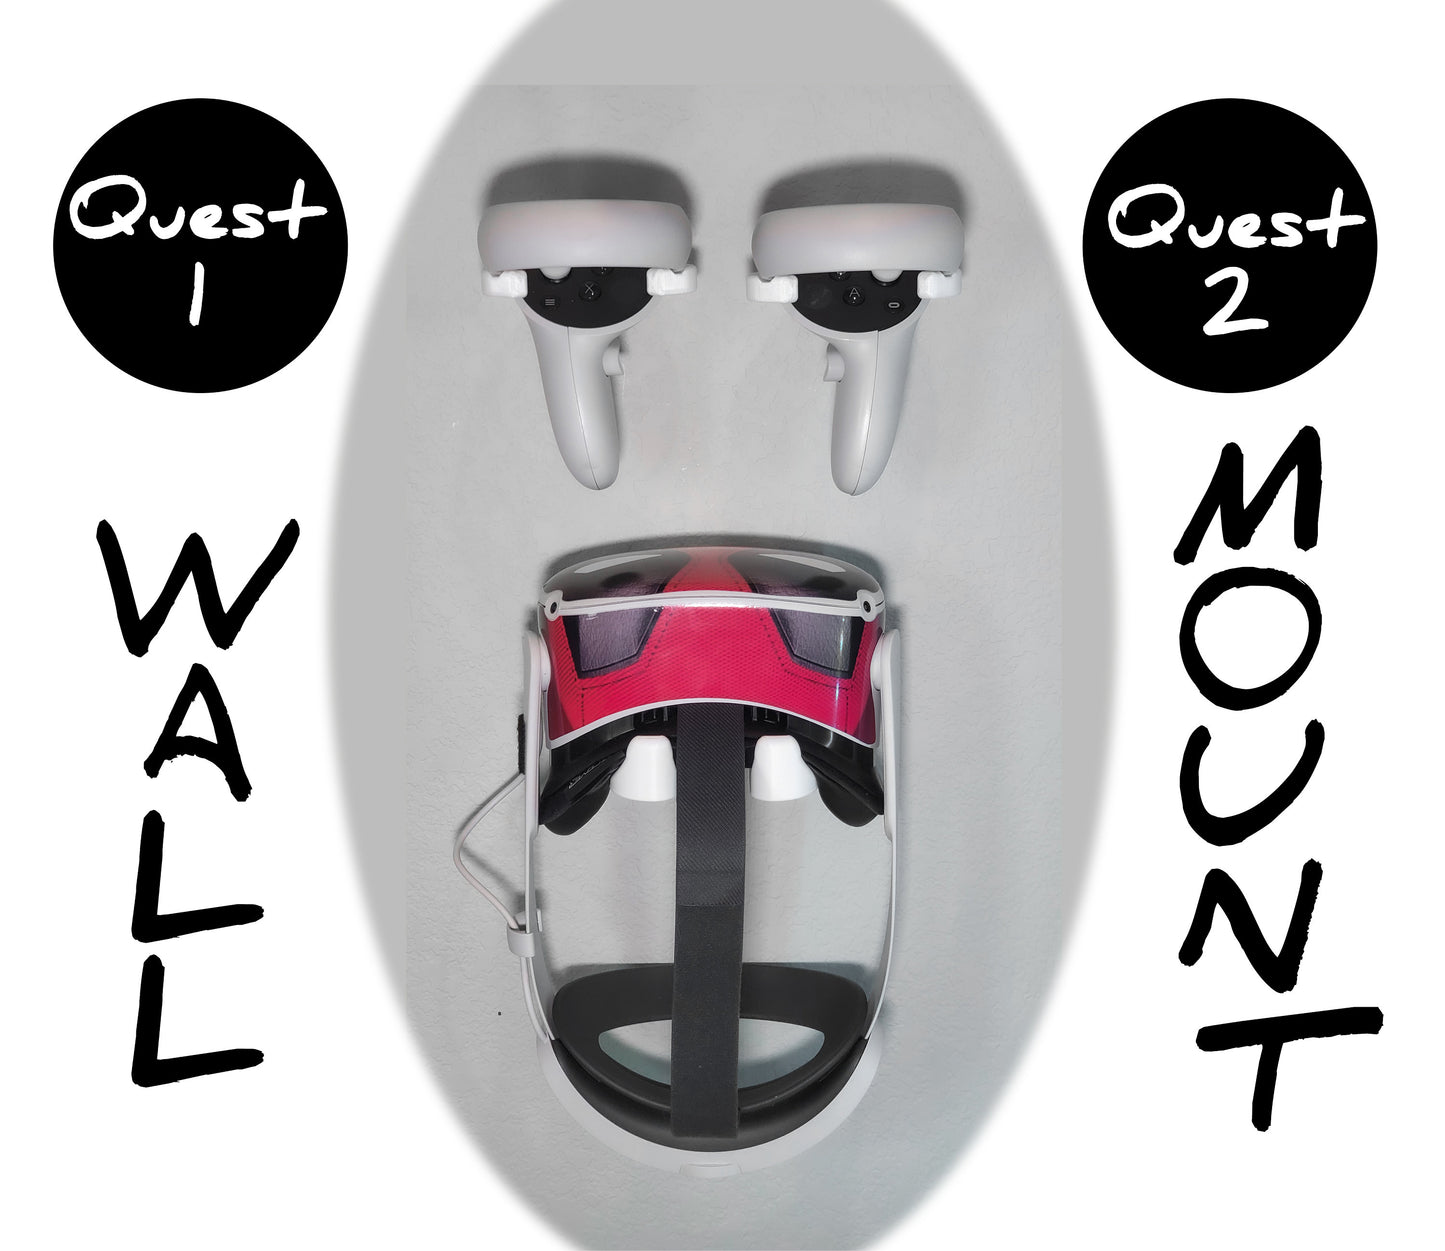 Meta/Meta Quest Wall Mount!